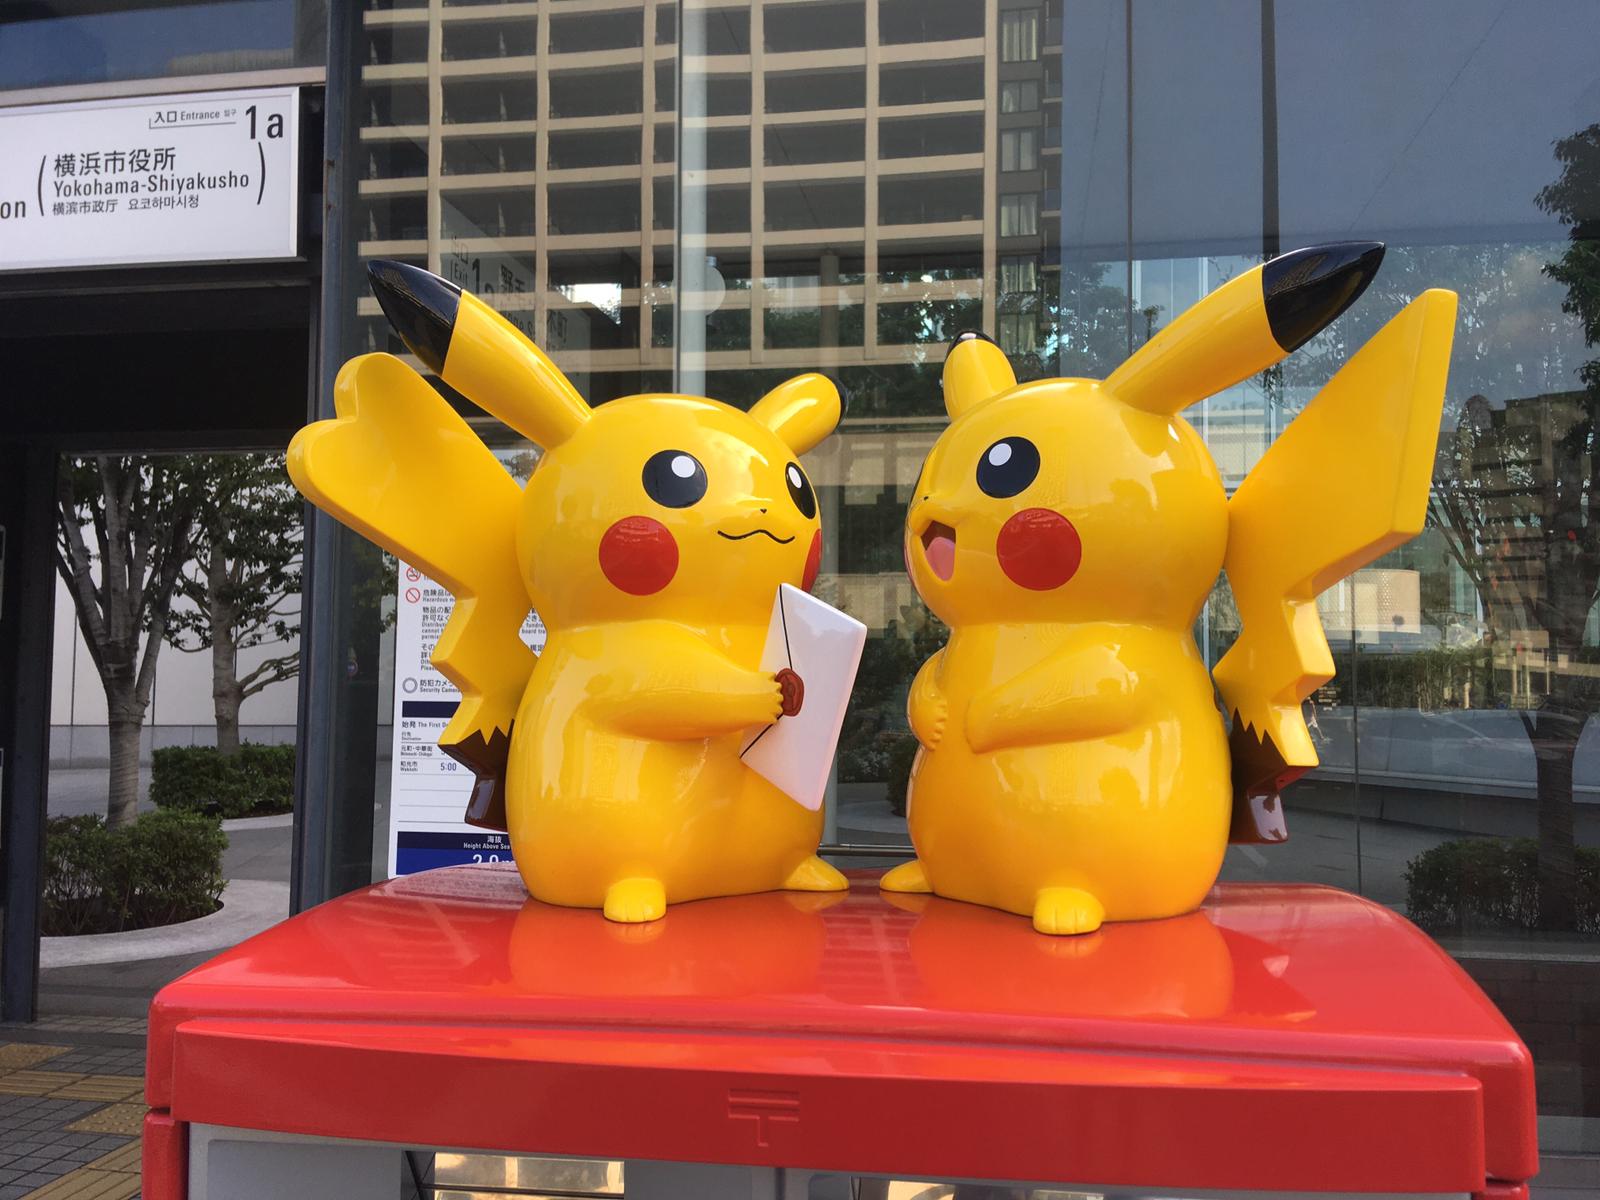 Passport Cover Sitting Pikachu Pokémon - Meccha Japan